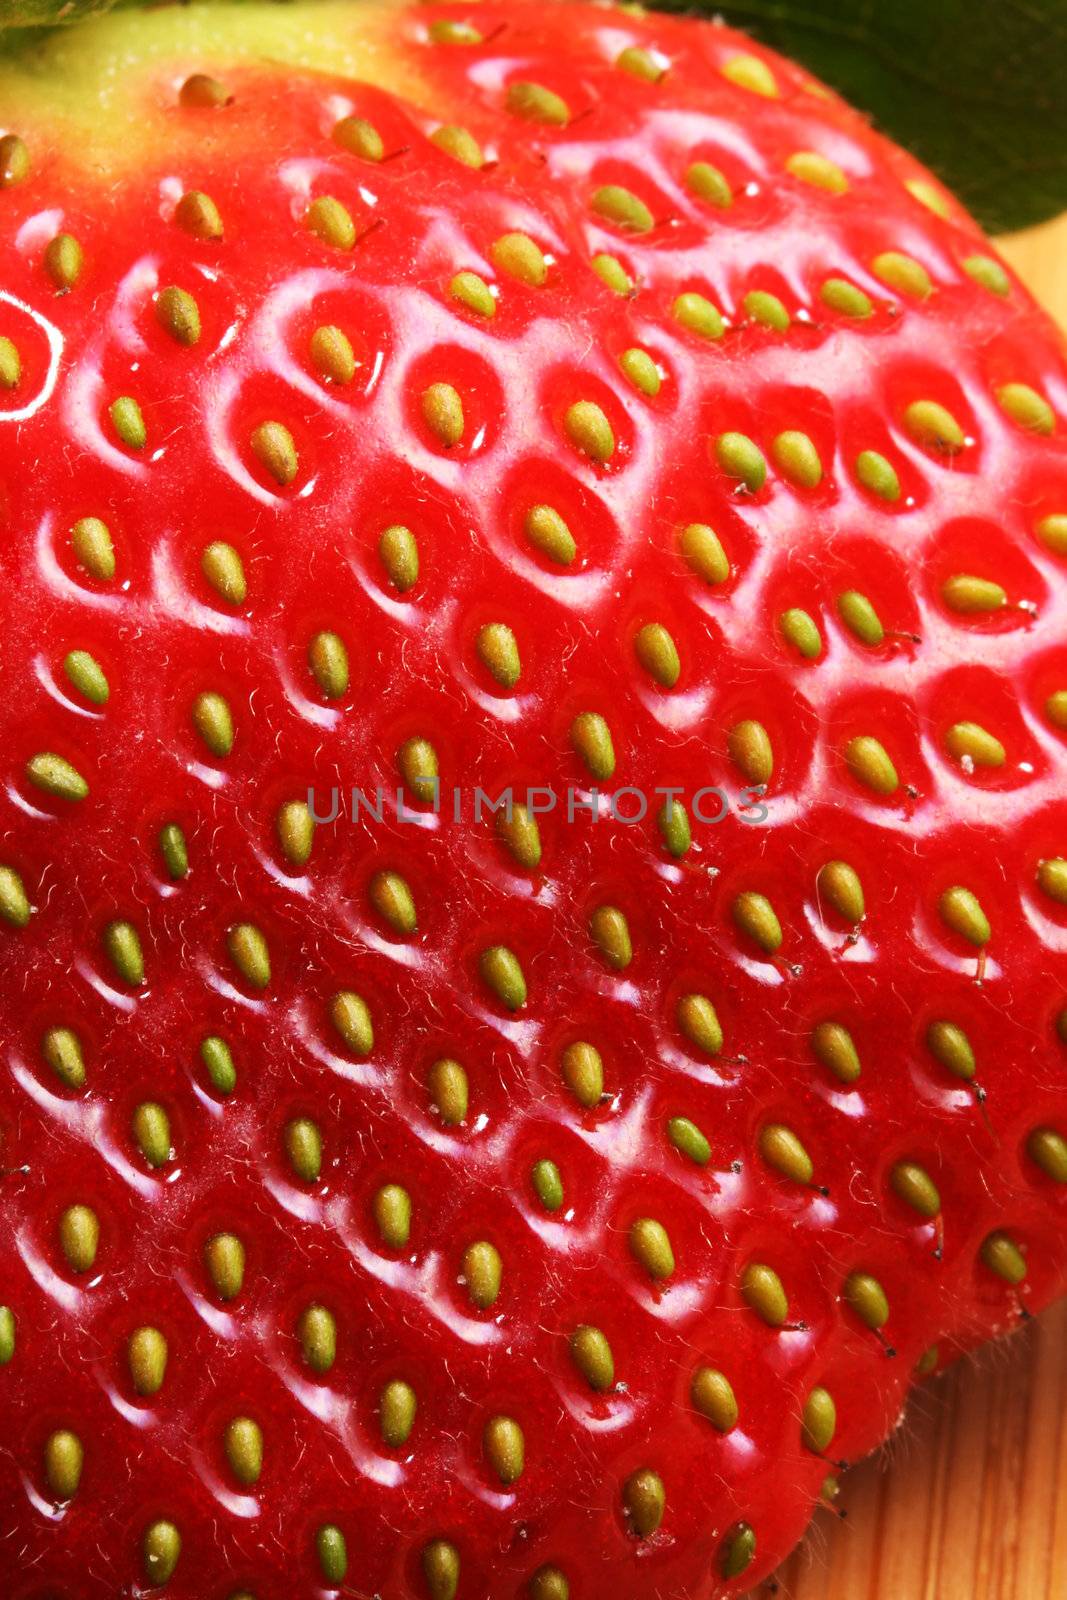 Strawberry macro by Geoarts